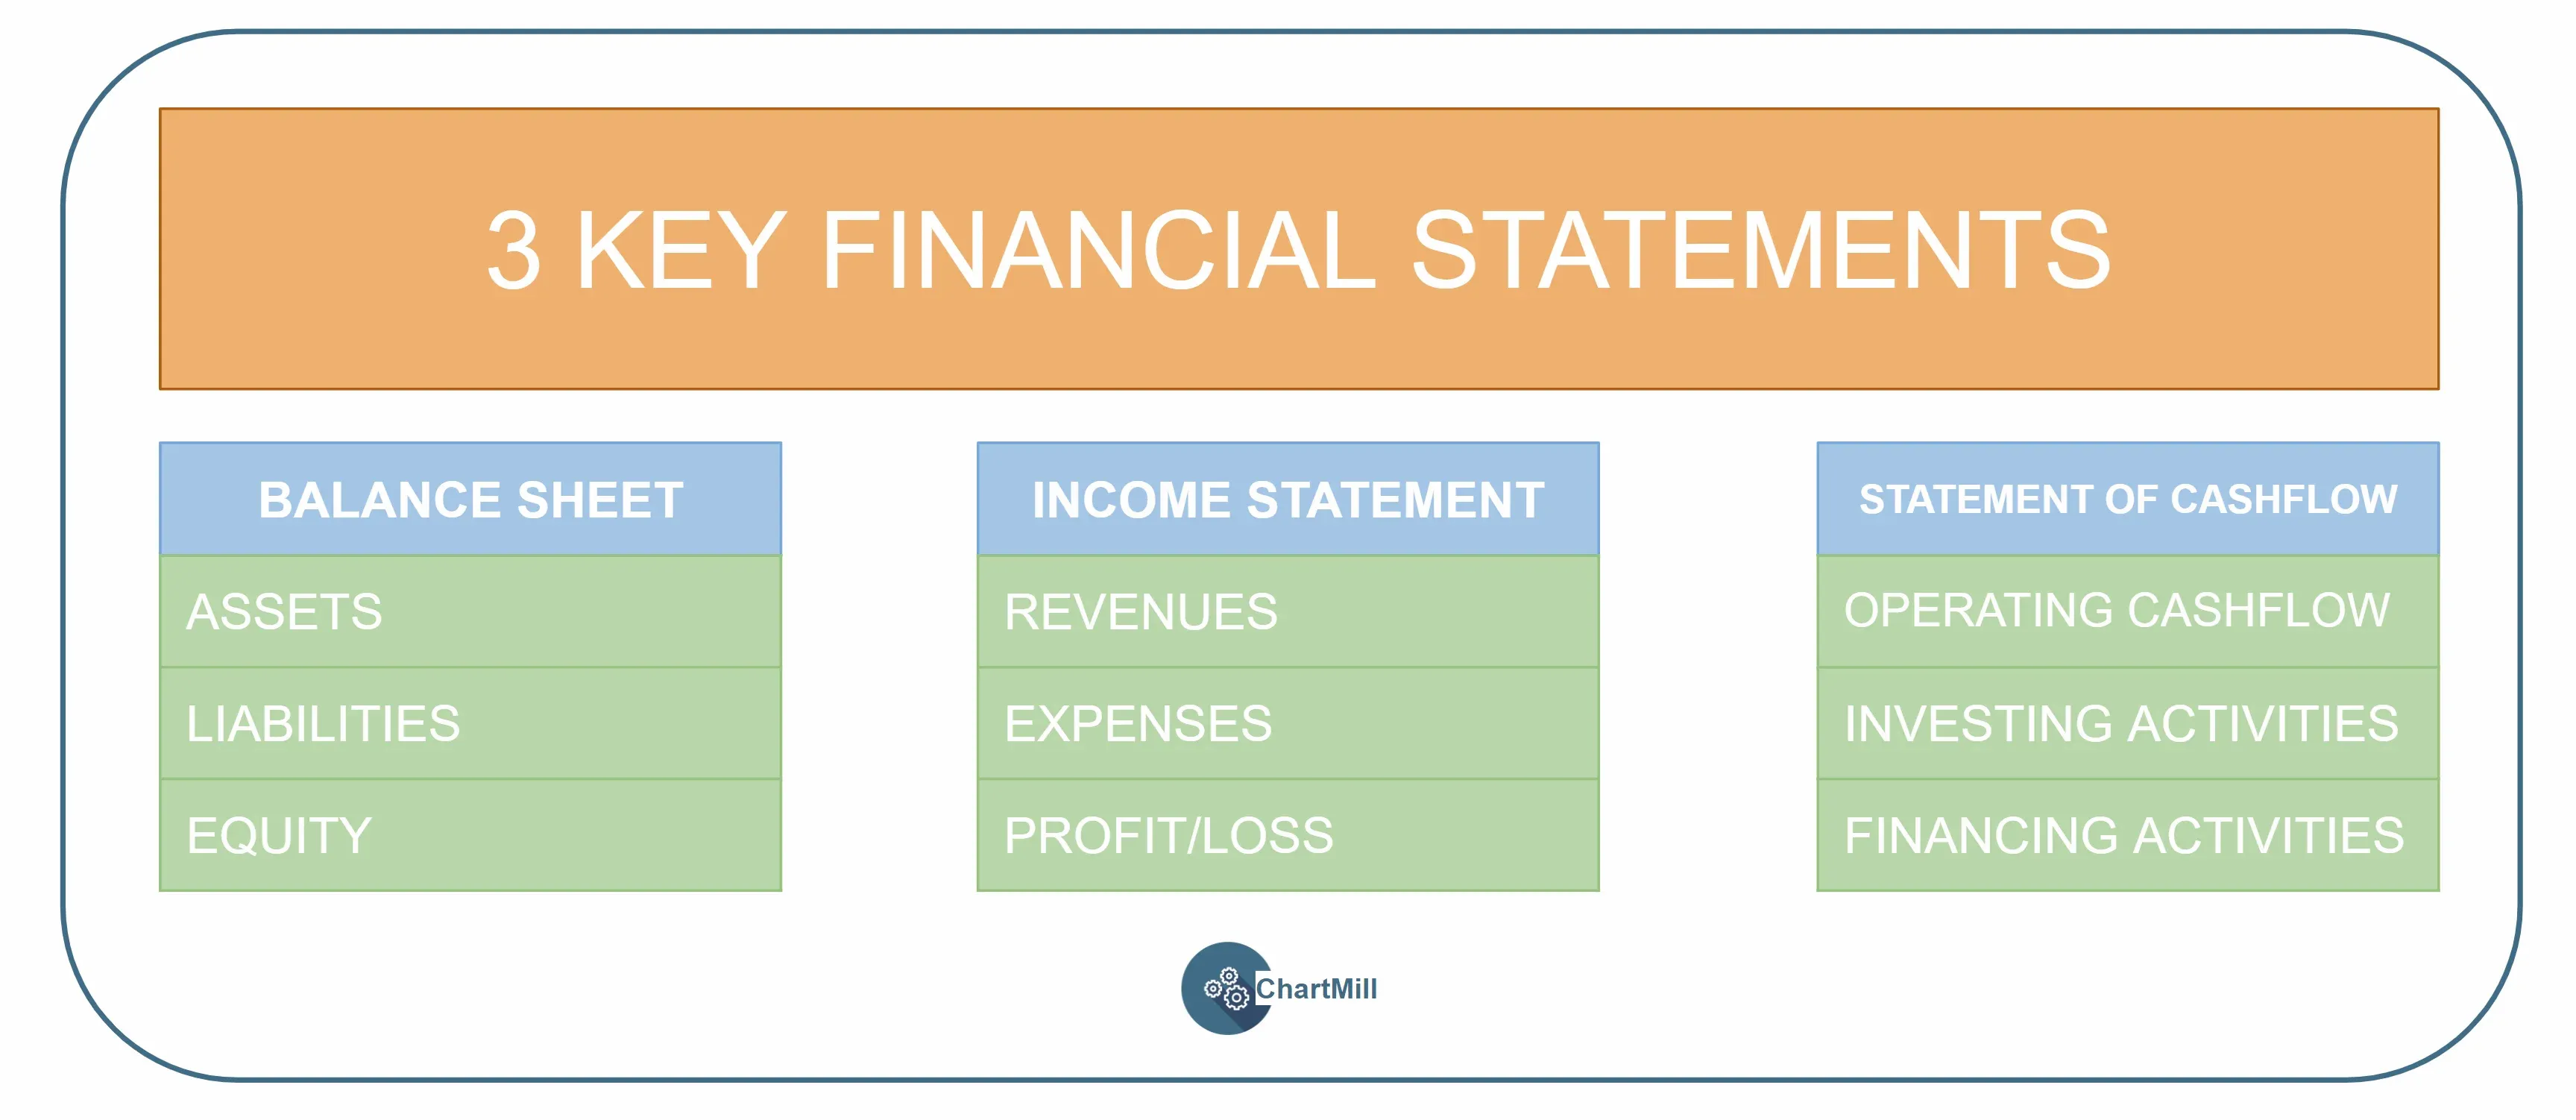 3 key financial statements